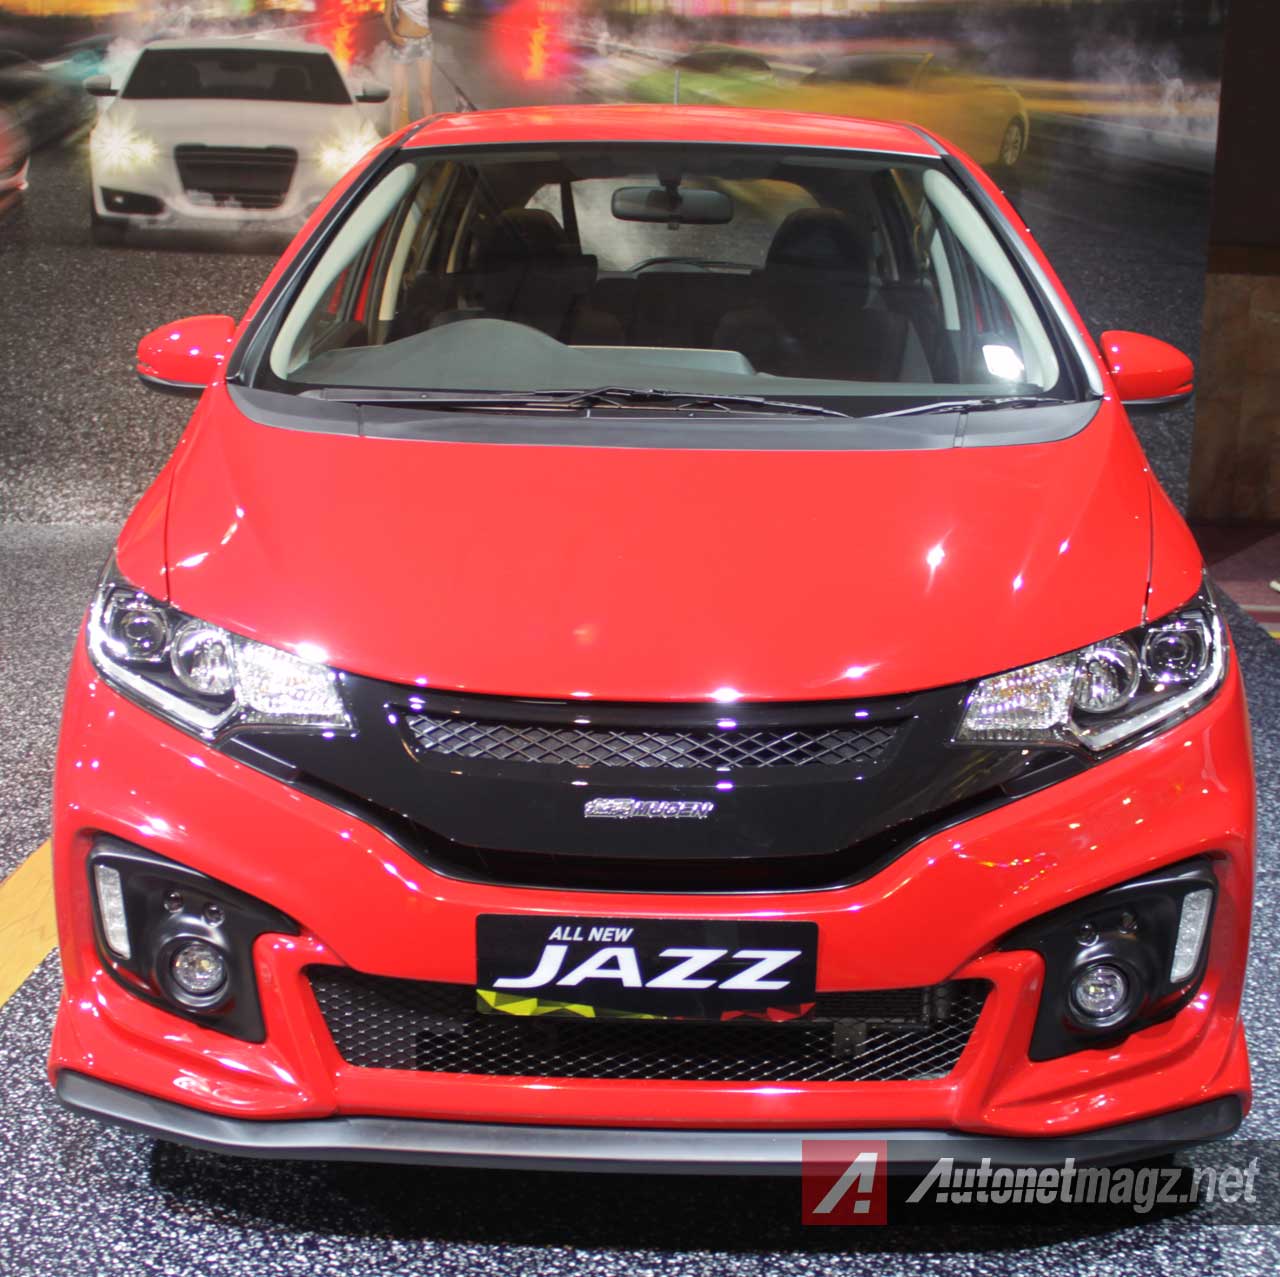 Honda, Honda-Jazz-Mugen-2014-Indonesia: First Impression Review Honda Jazz Mugen 2014 by AutonetMagz